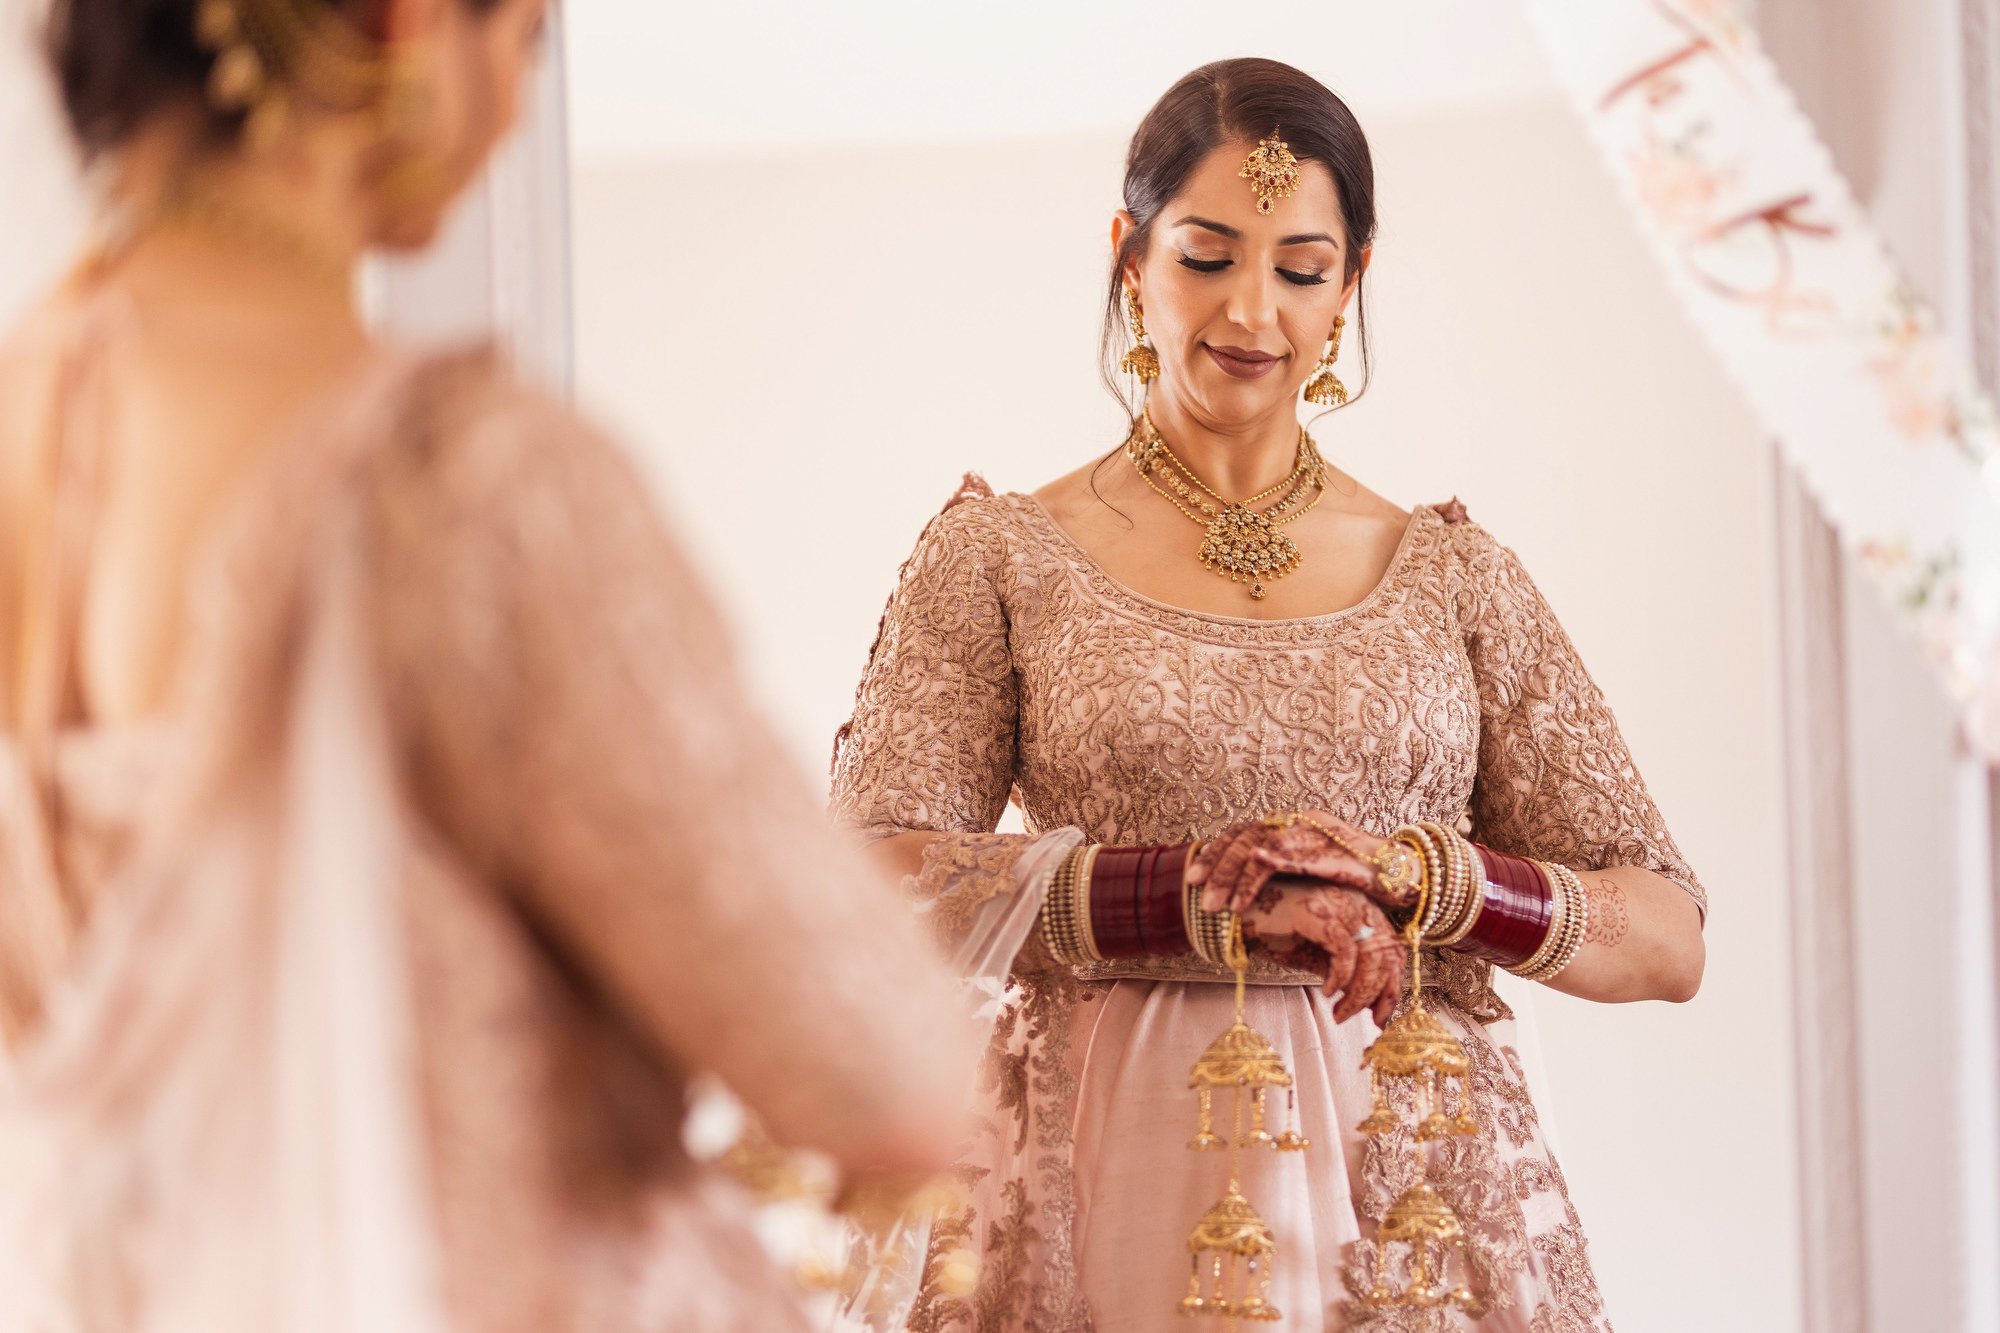 Sikh wedding photographer, Cardiff, Wales, bride getting ready